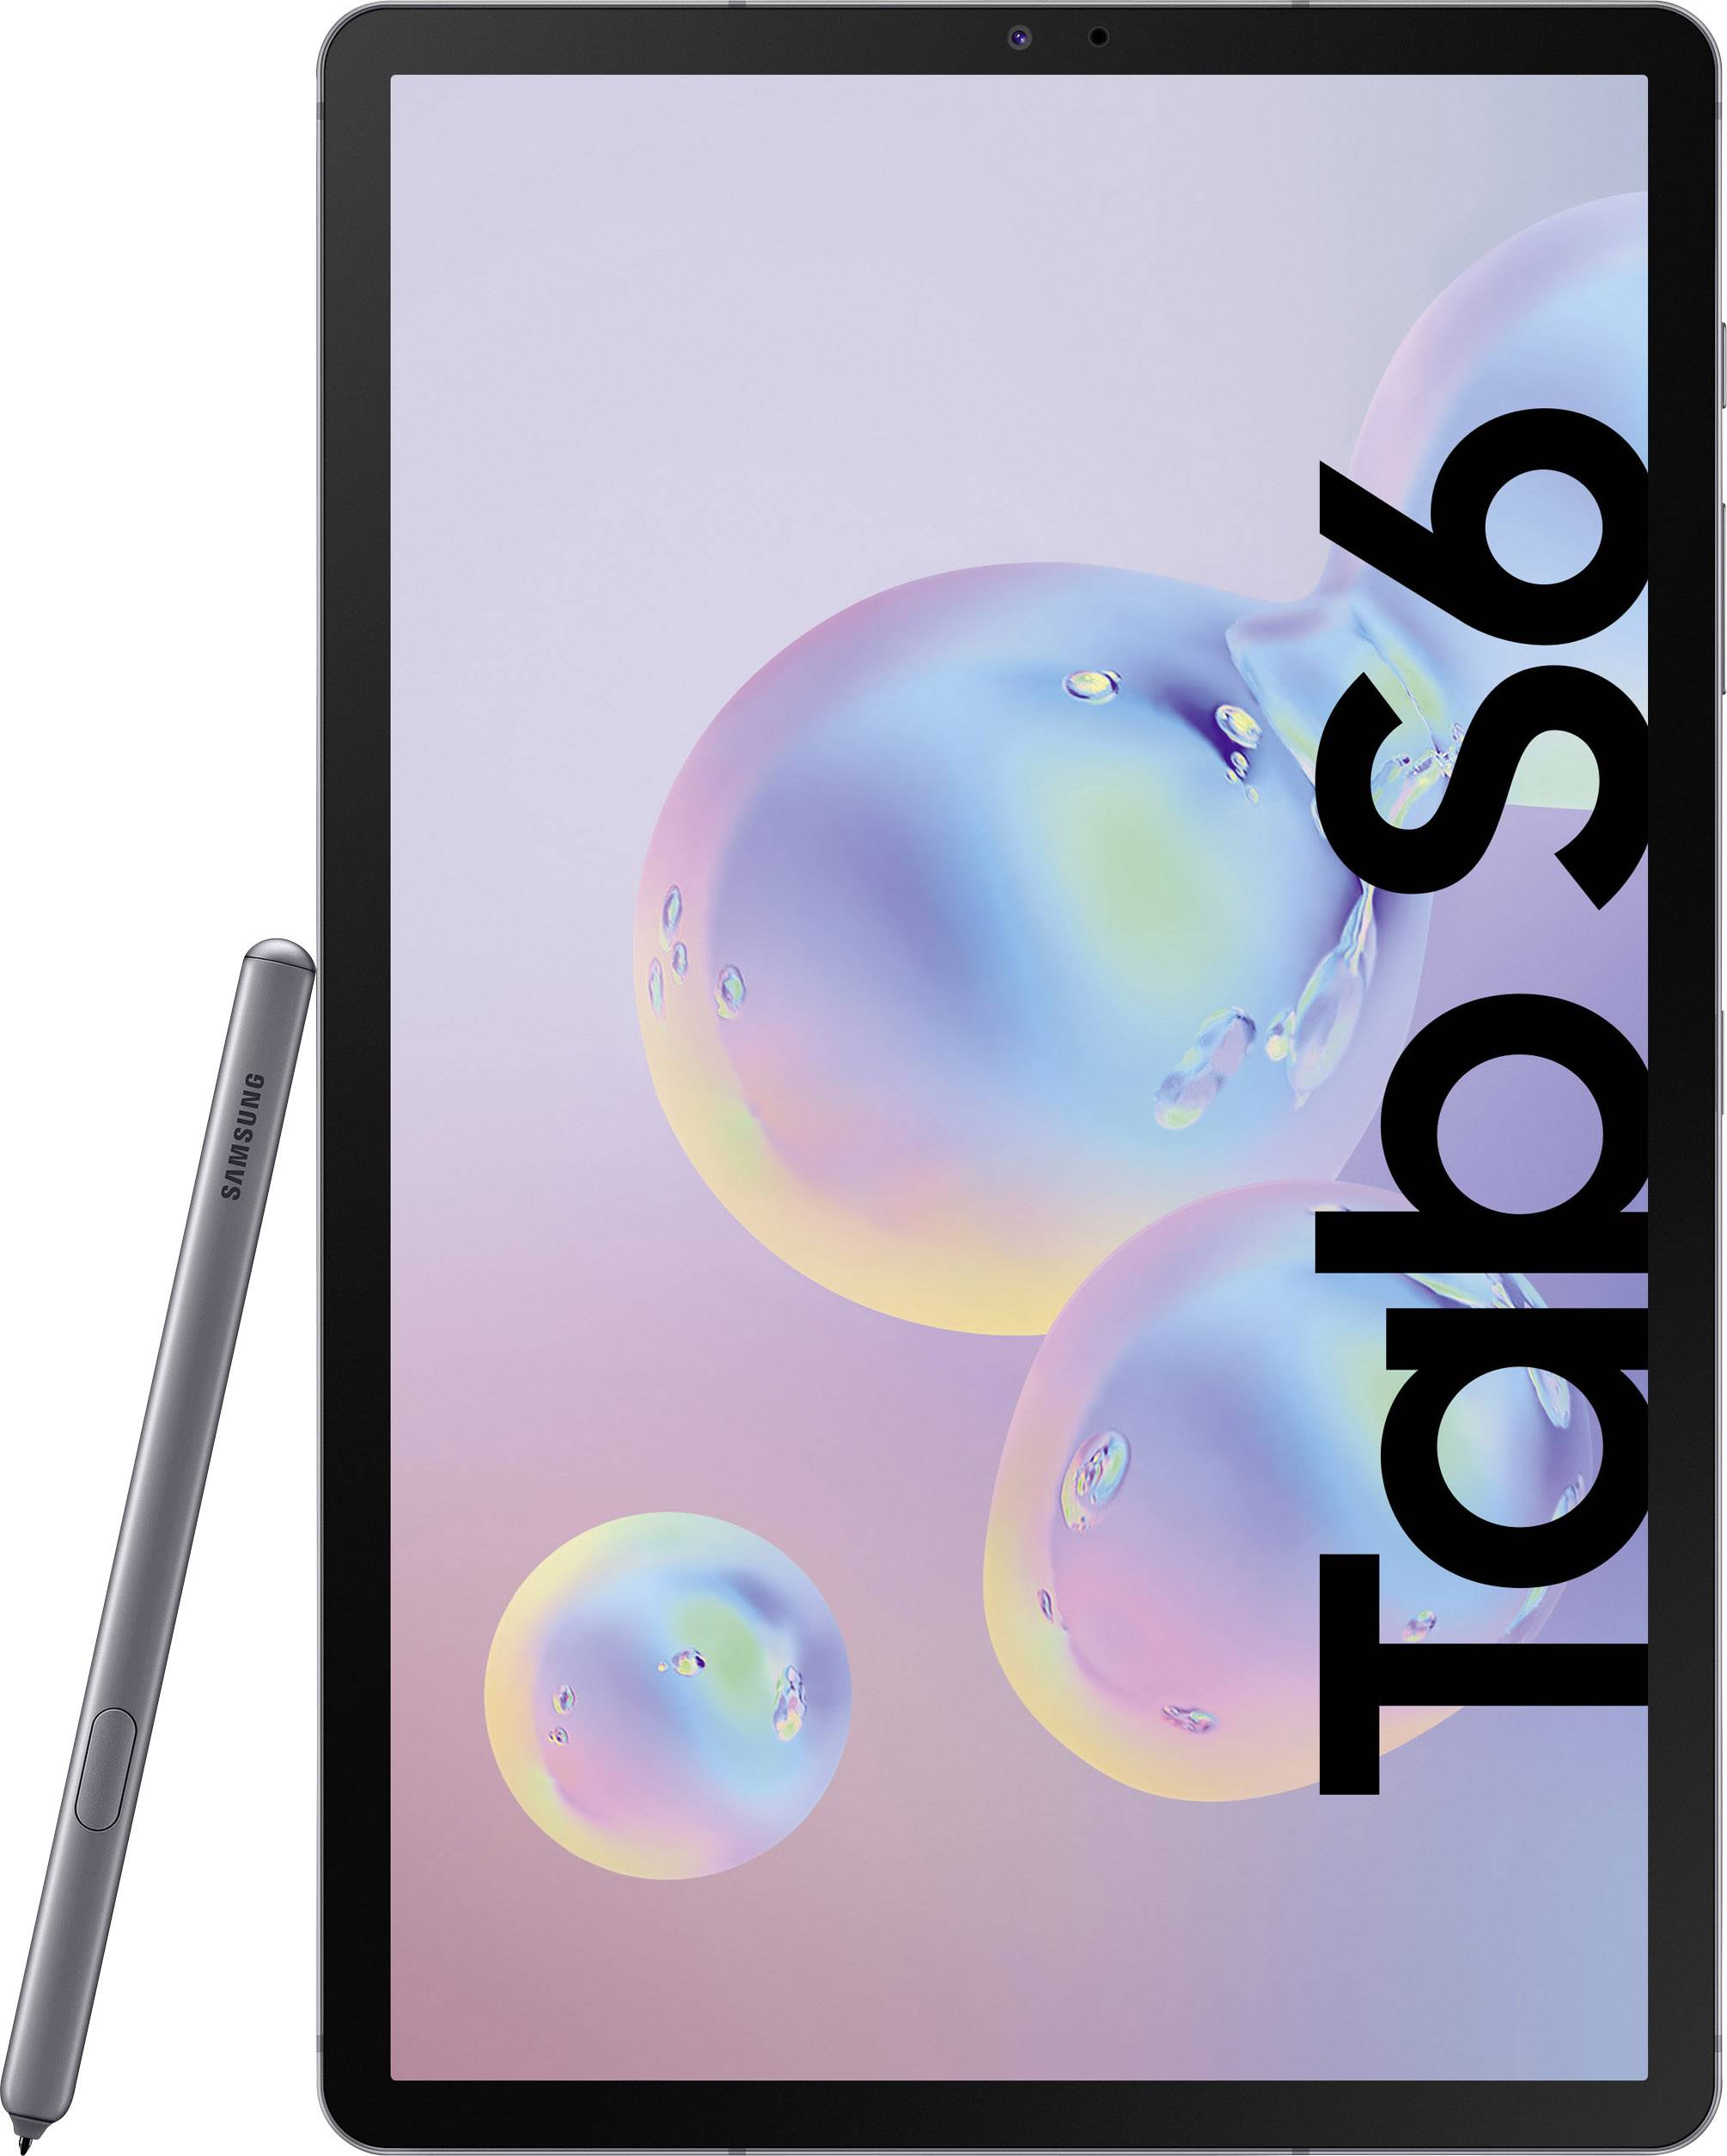 dienblad Verrassend genoeg gewelddadig Samsung Galaxy Tab S6 LTE/4G, WiFi 256 GB Grey Android 26.7 cm (10.5 inch)  2.8 GHz Qualcomm® Snapdragon Android™ 9.0 256 | Conrad.com